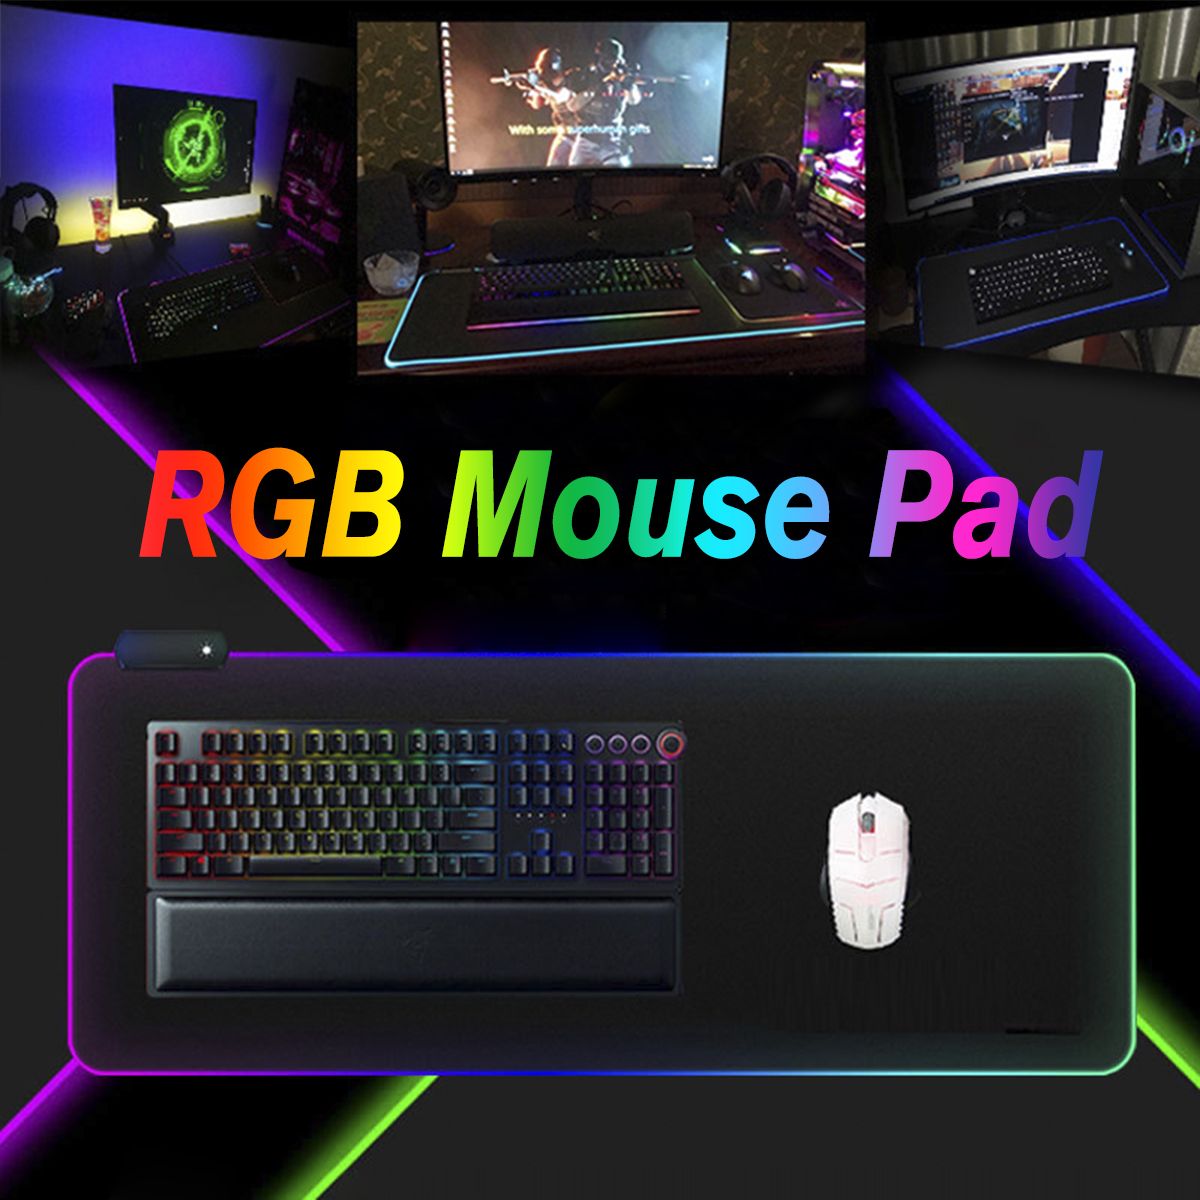 350x250x4mm3008004mm4009004mm-RGB-Colorful-Backlit-LED-Waterproof-Big-Mouse-Pad-Anti-skid-Rubber-Mat-1518266